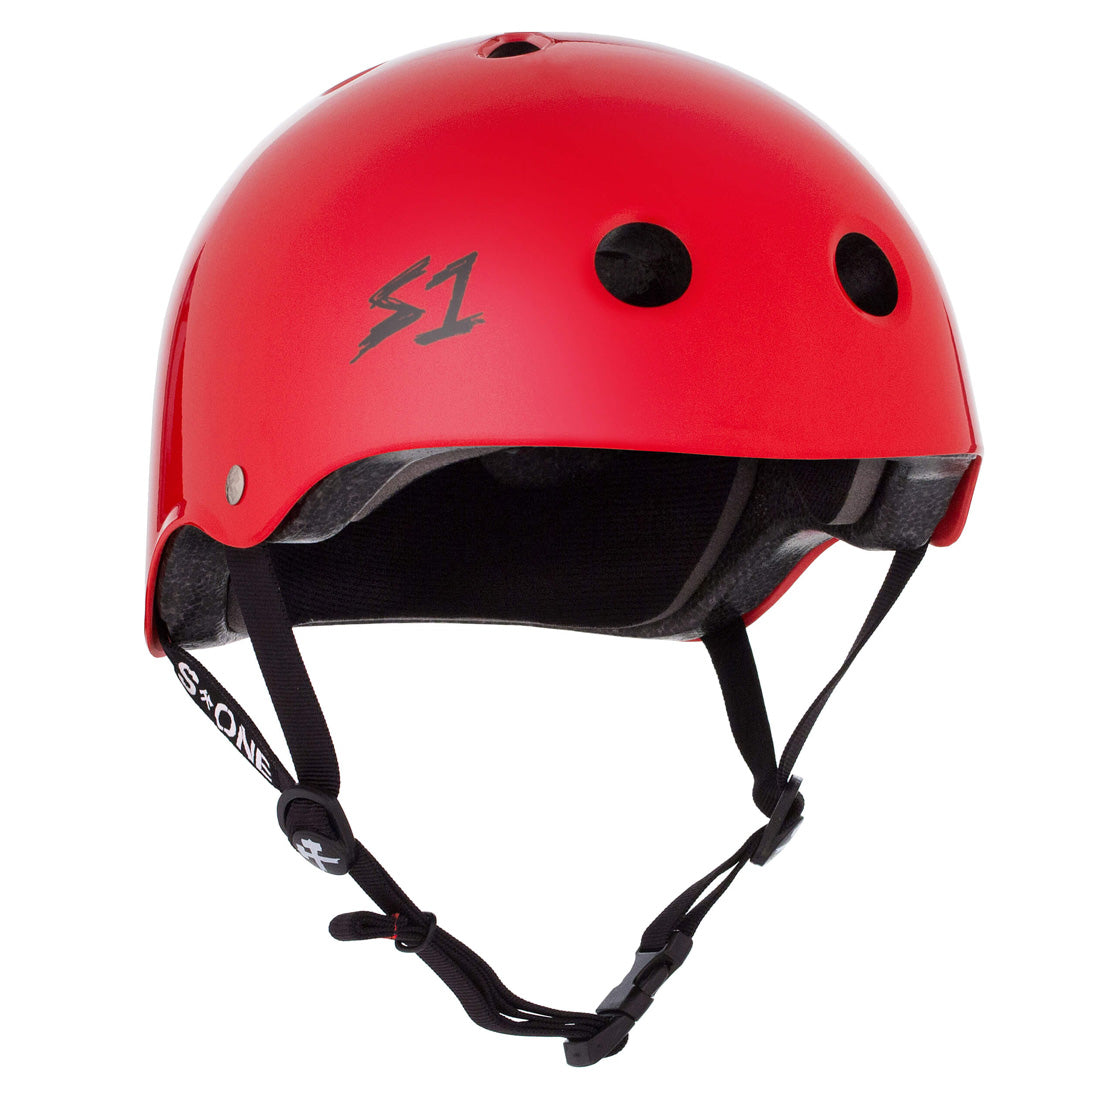 S-One Lifer Helmet - Bright Red Gloss Helmets